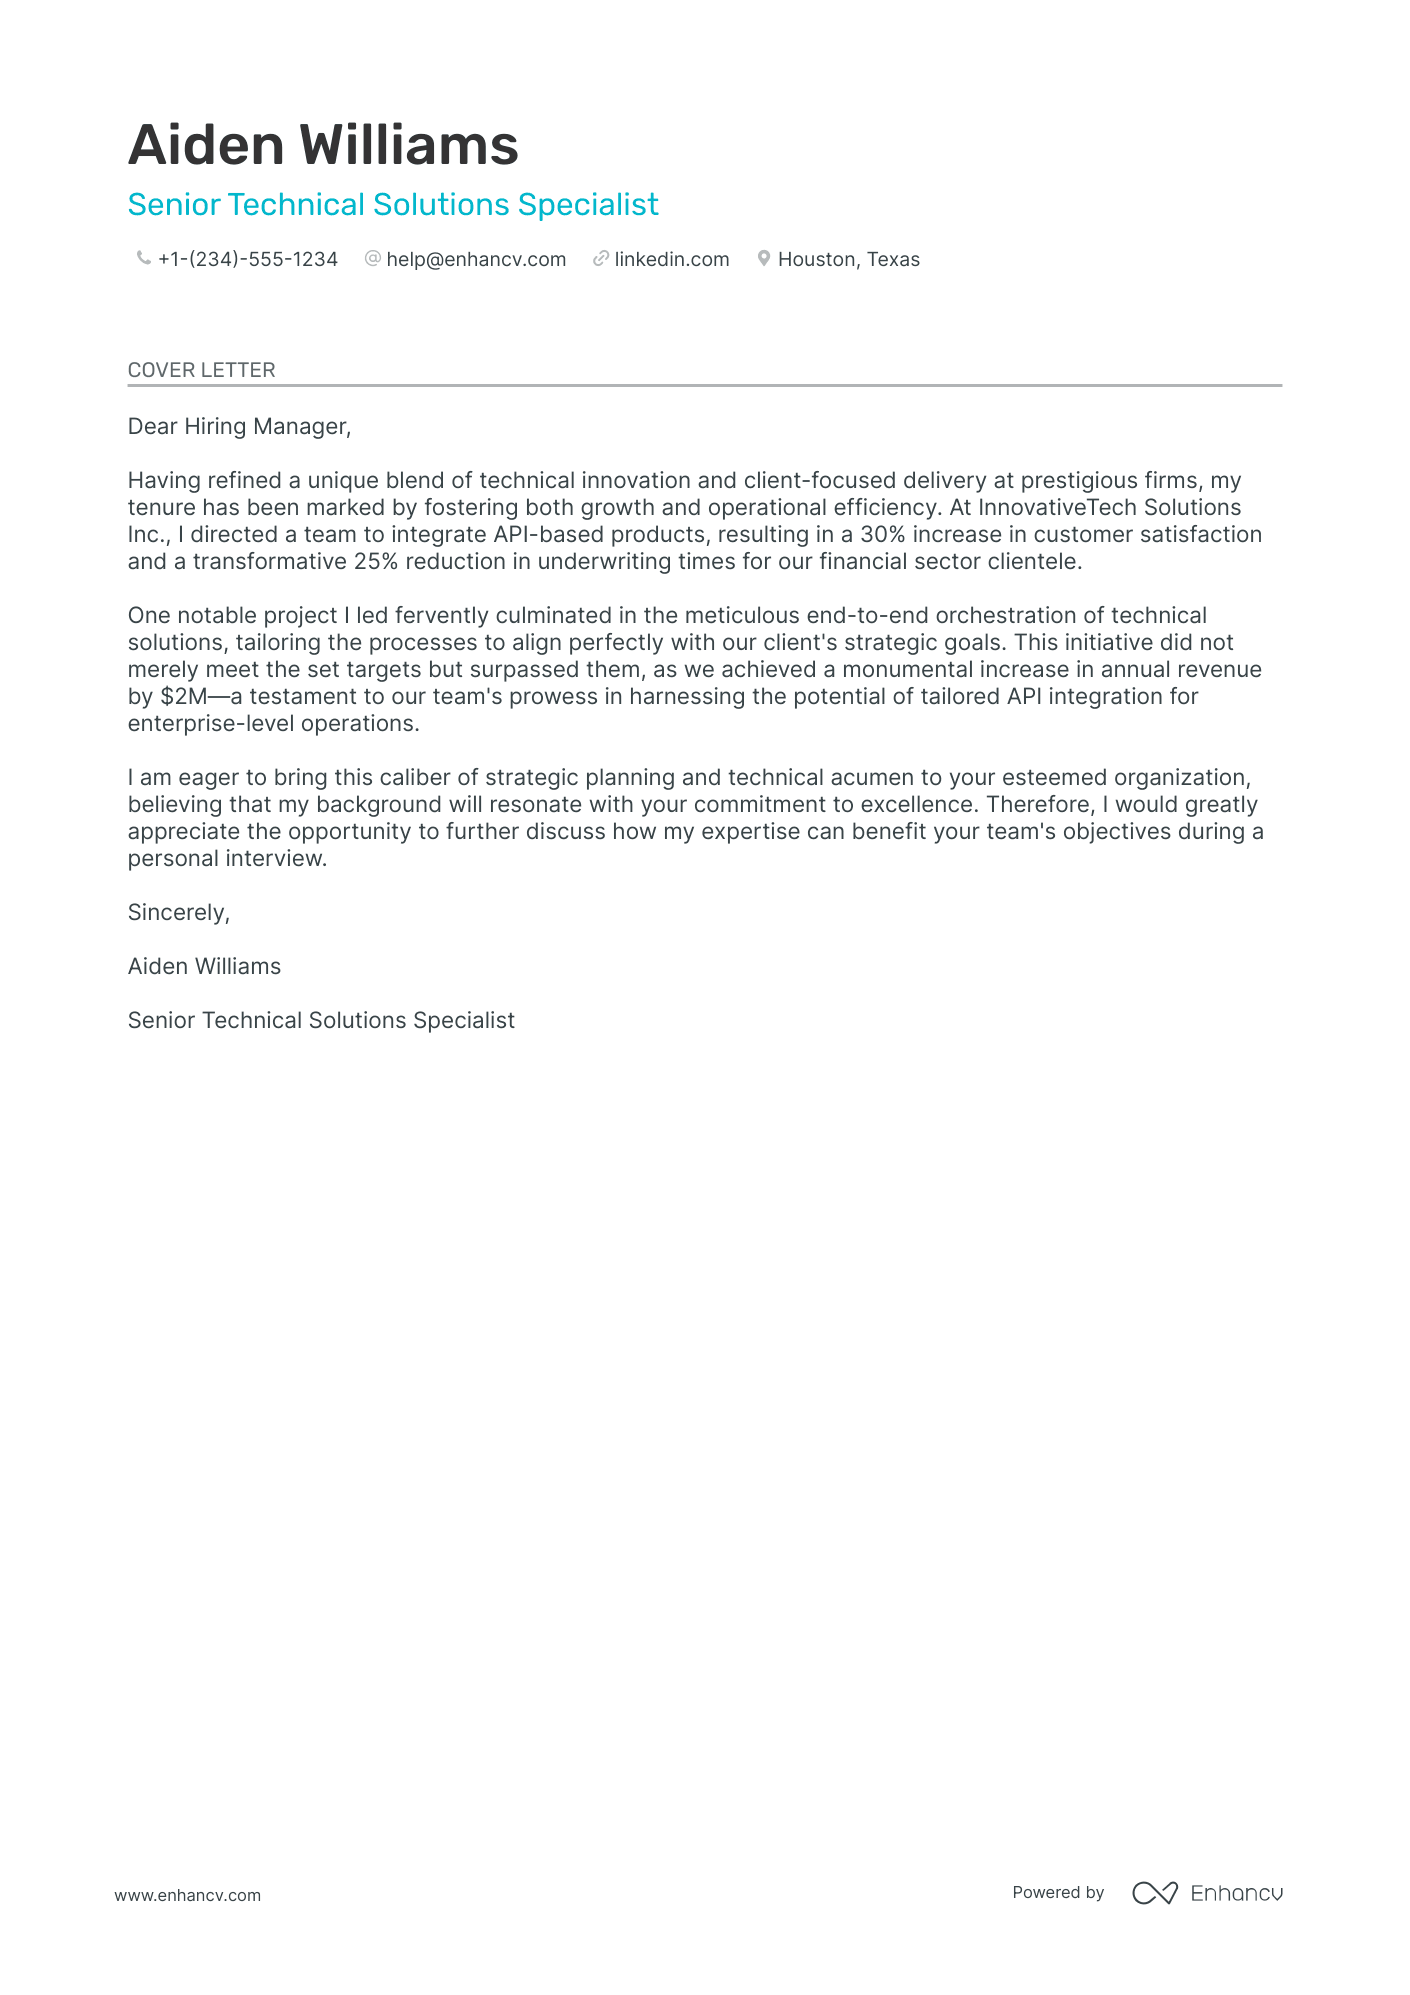 Senior Sales Engineer cover letter